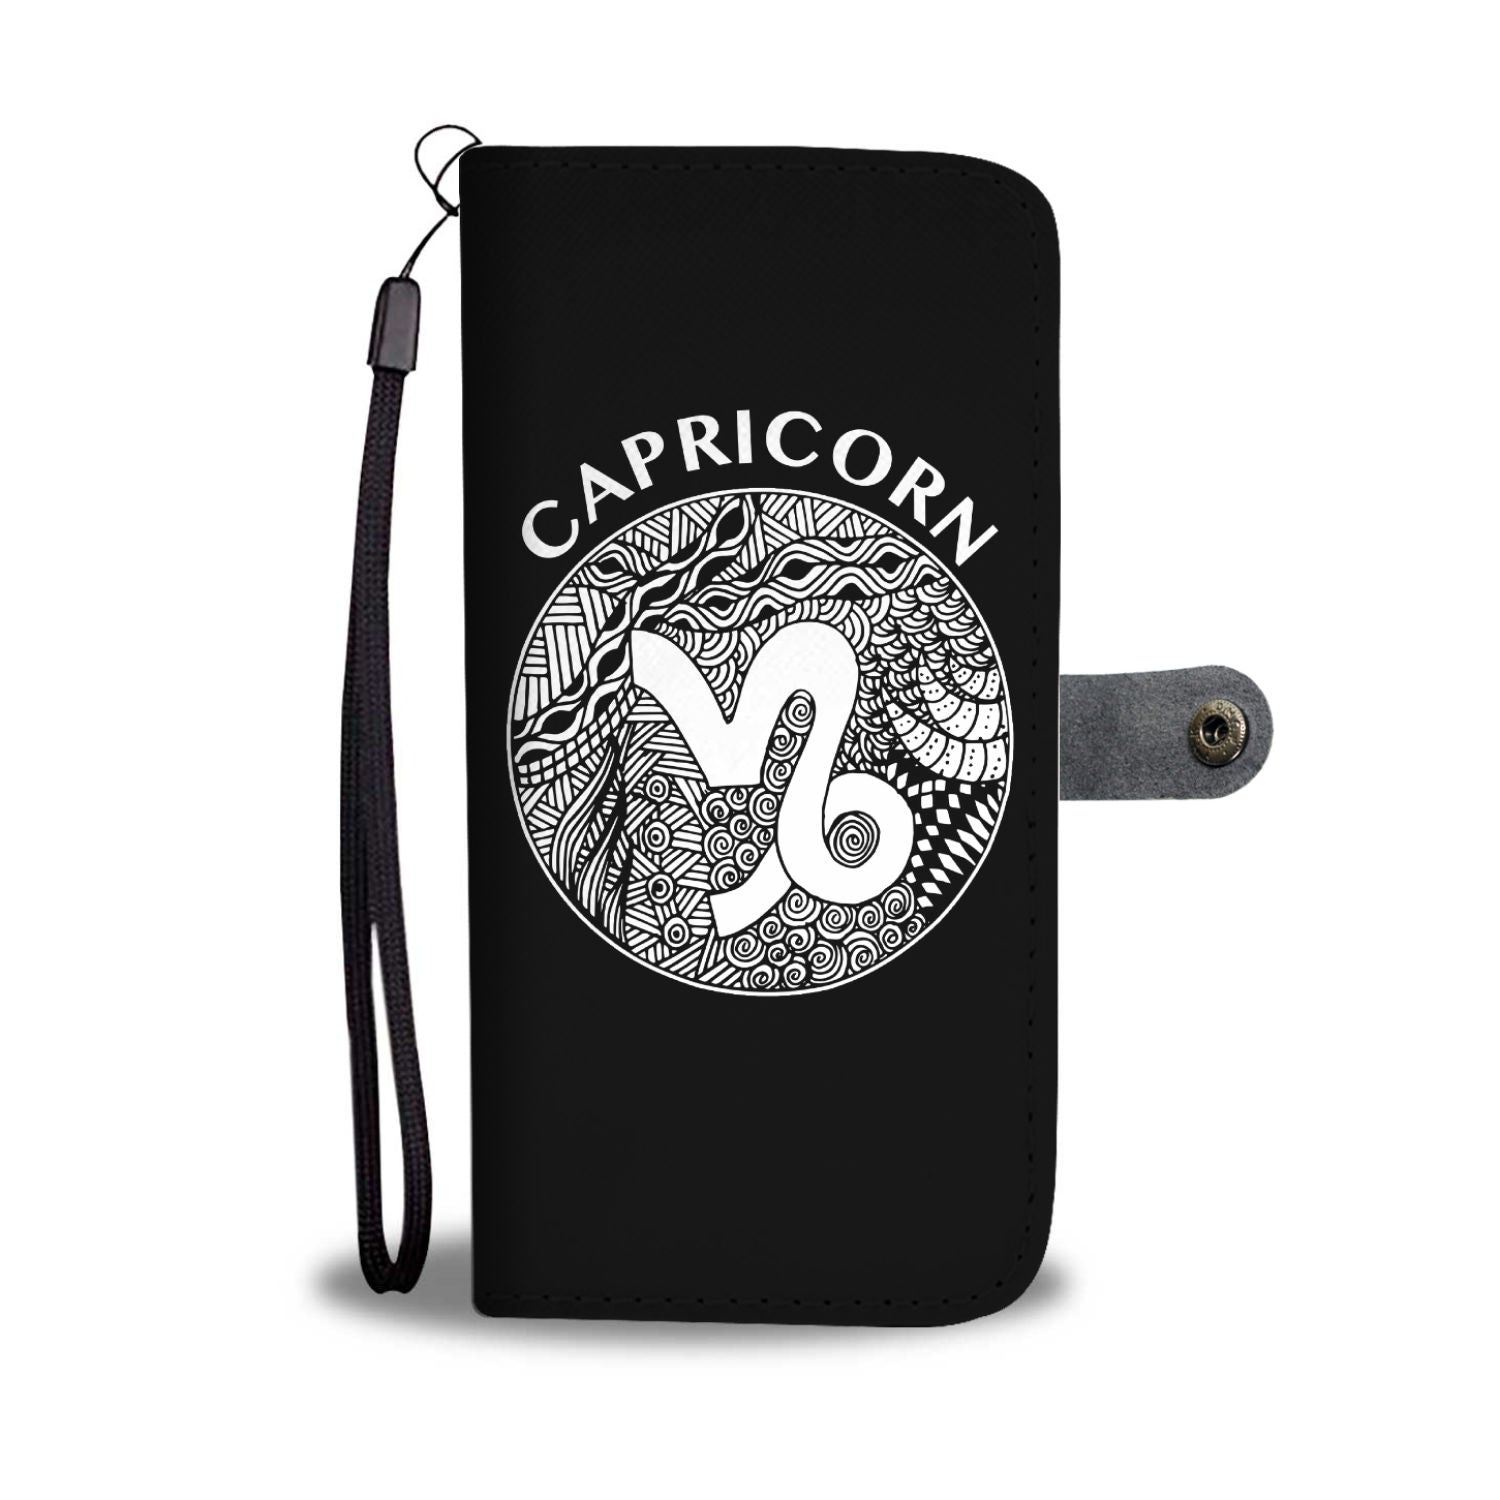 Capricorn Circle Phone Wallet